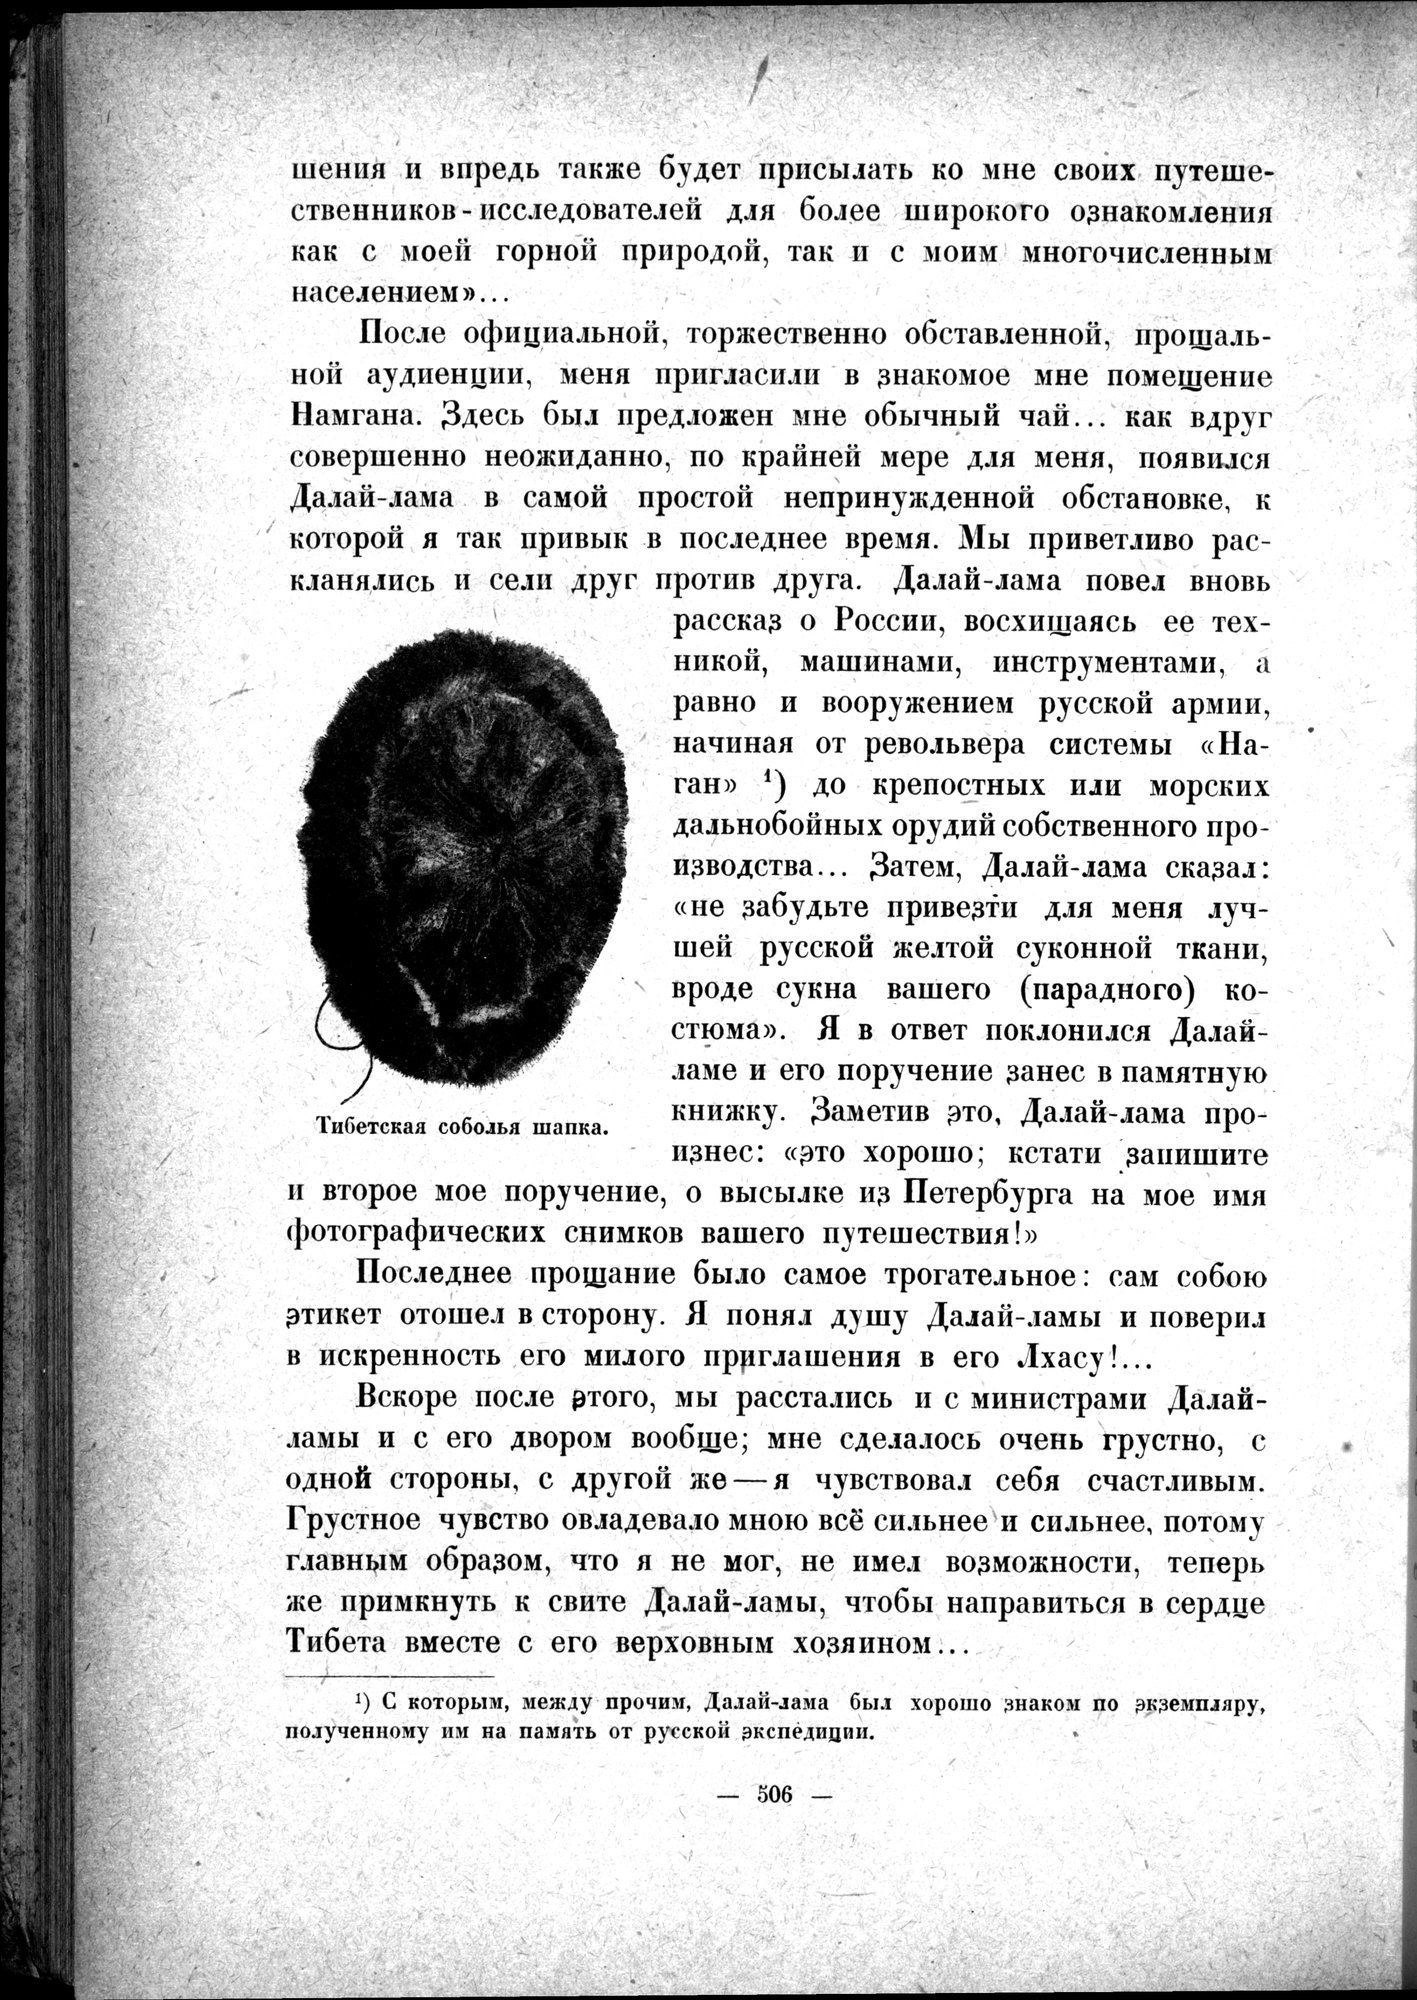 Mongoliya i Amdo i mertby gorod Khara-Khoto : vol.1 / Page 582 (Grayscale High Resolution Image)